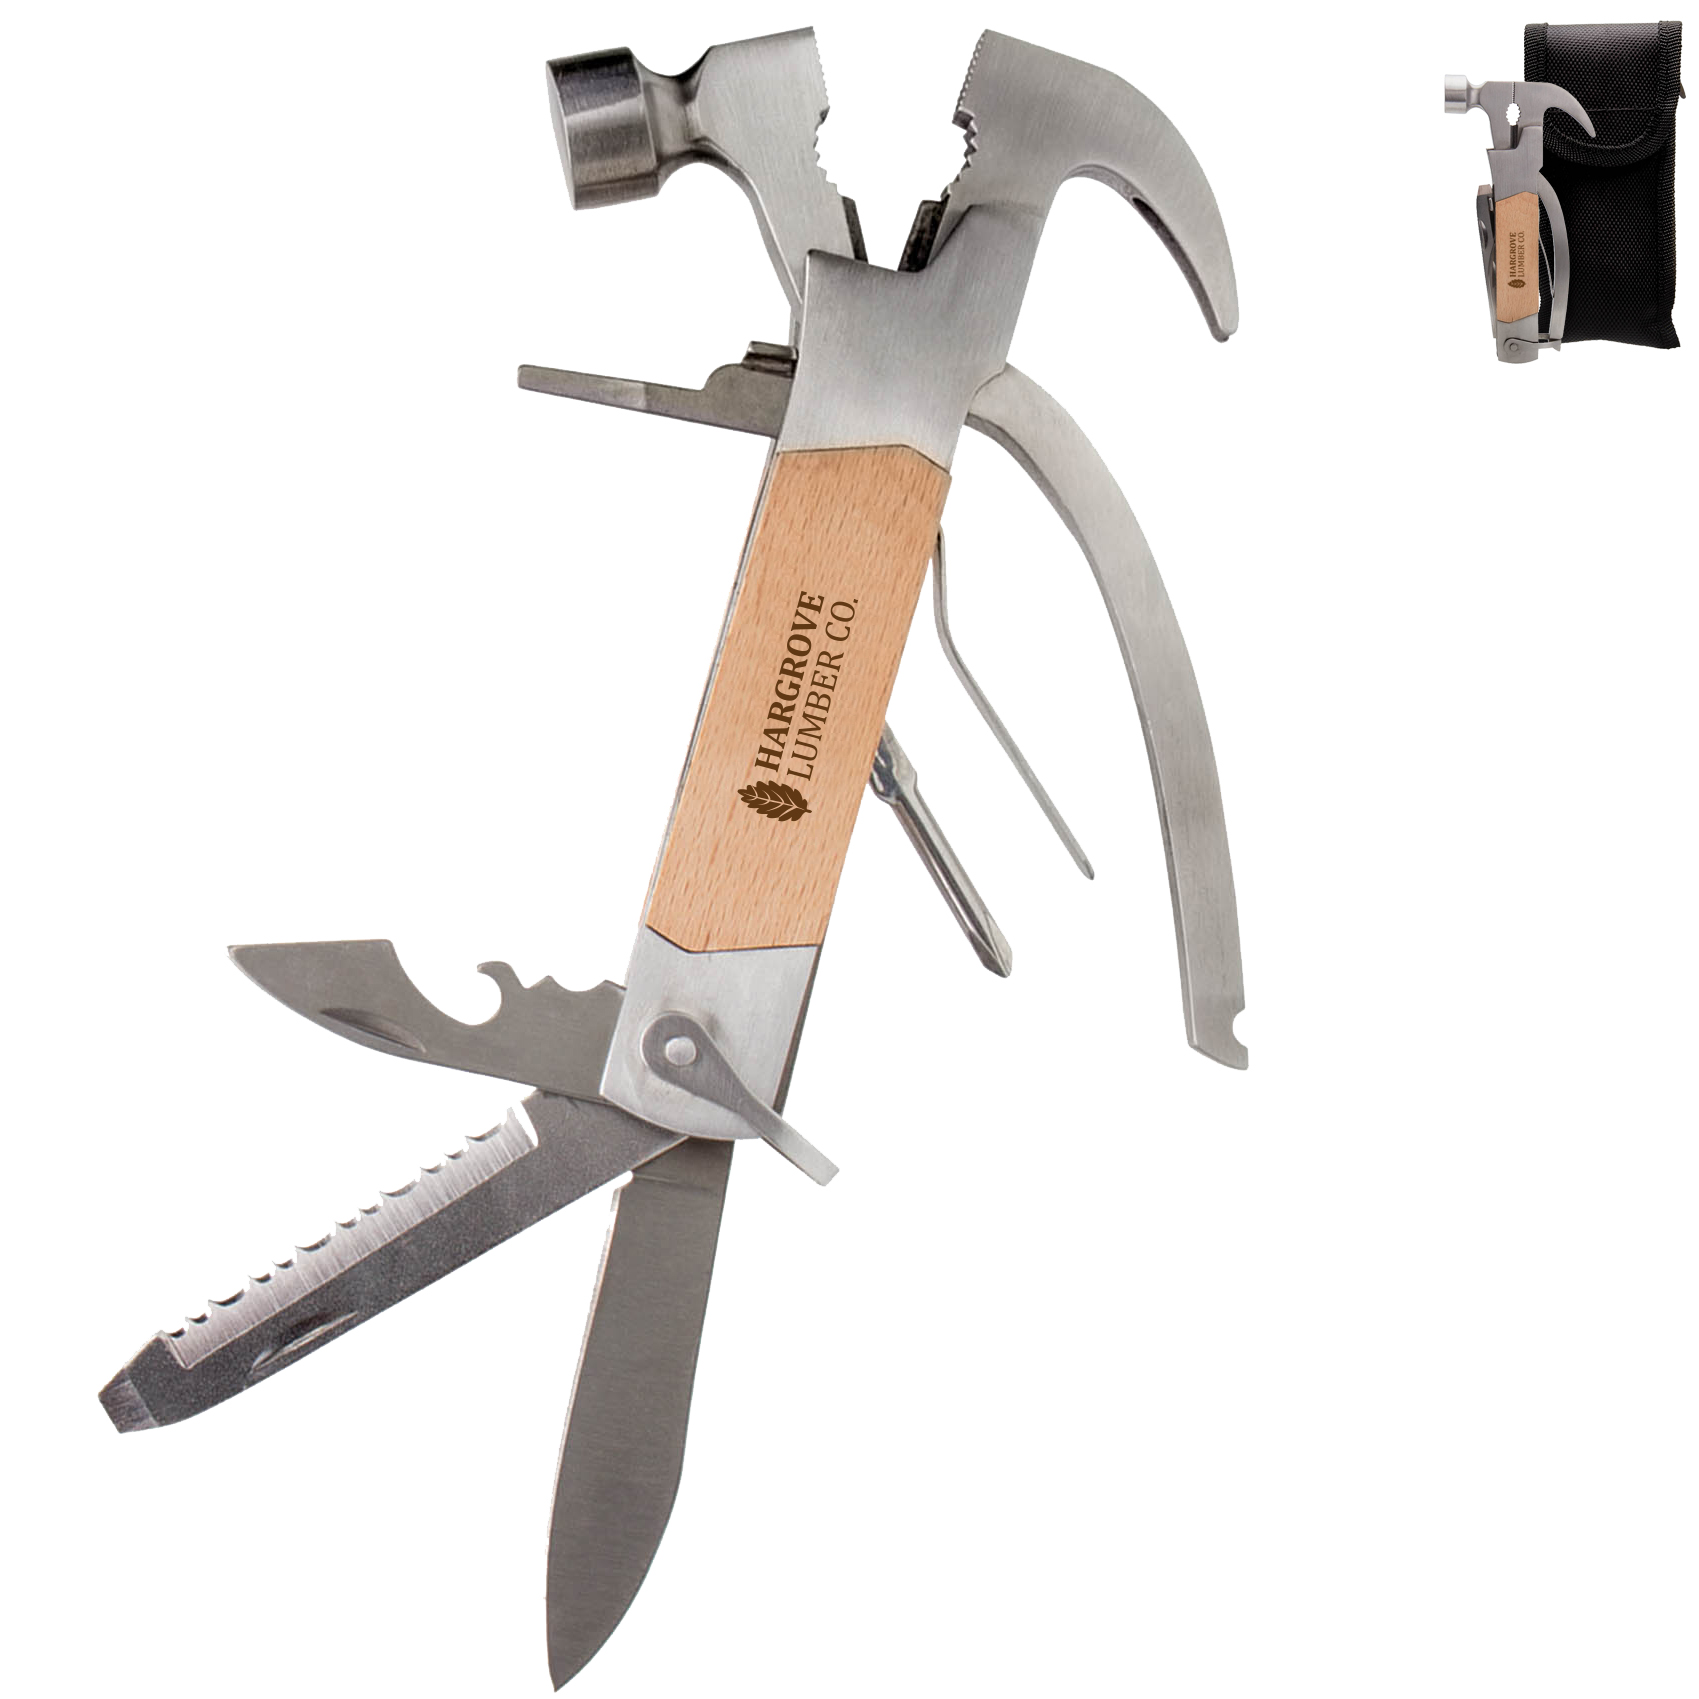 keychain multi tool hammer